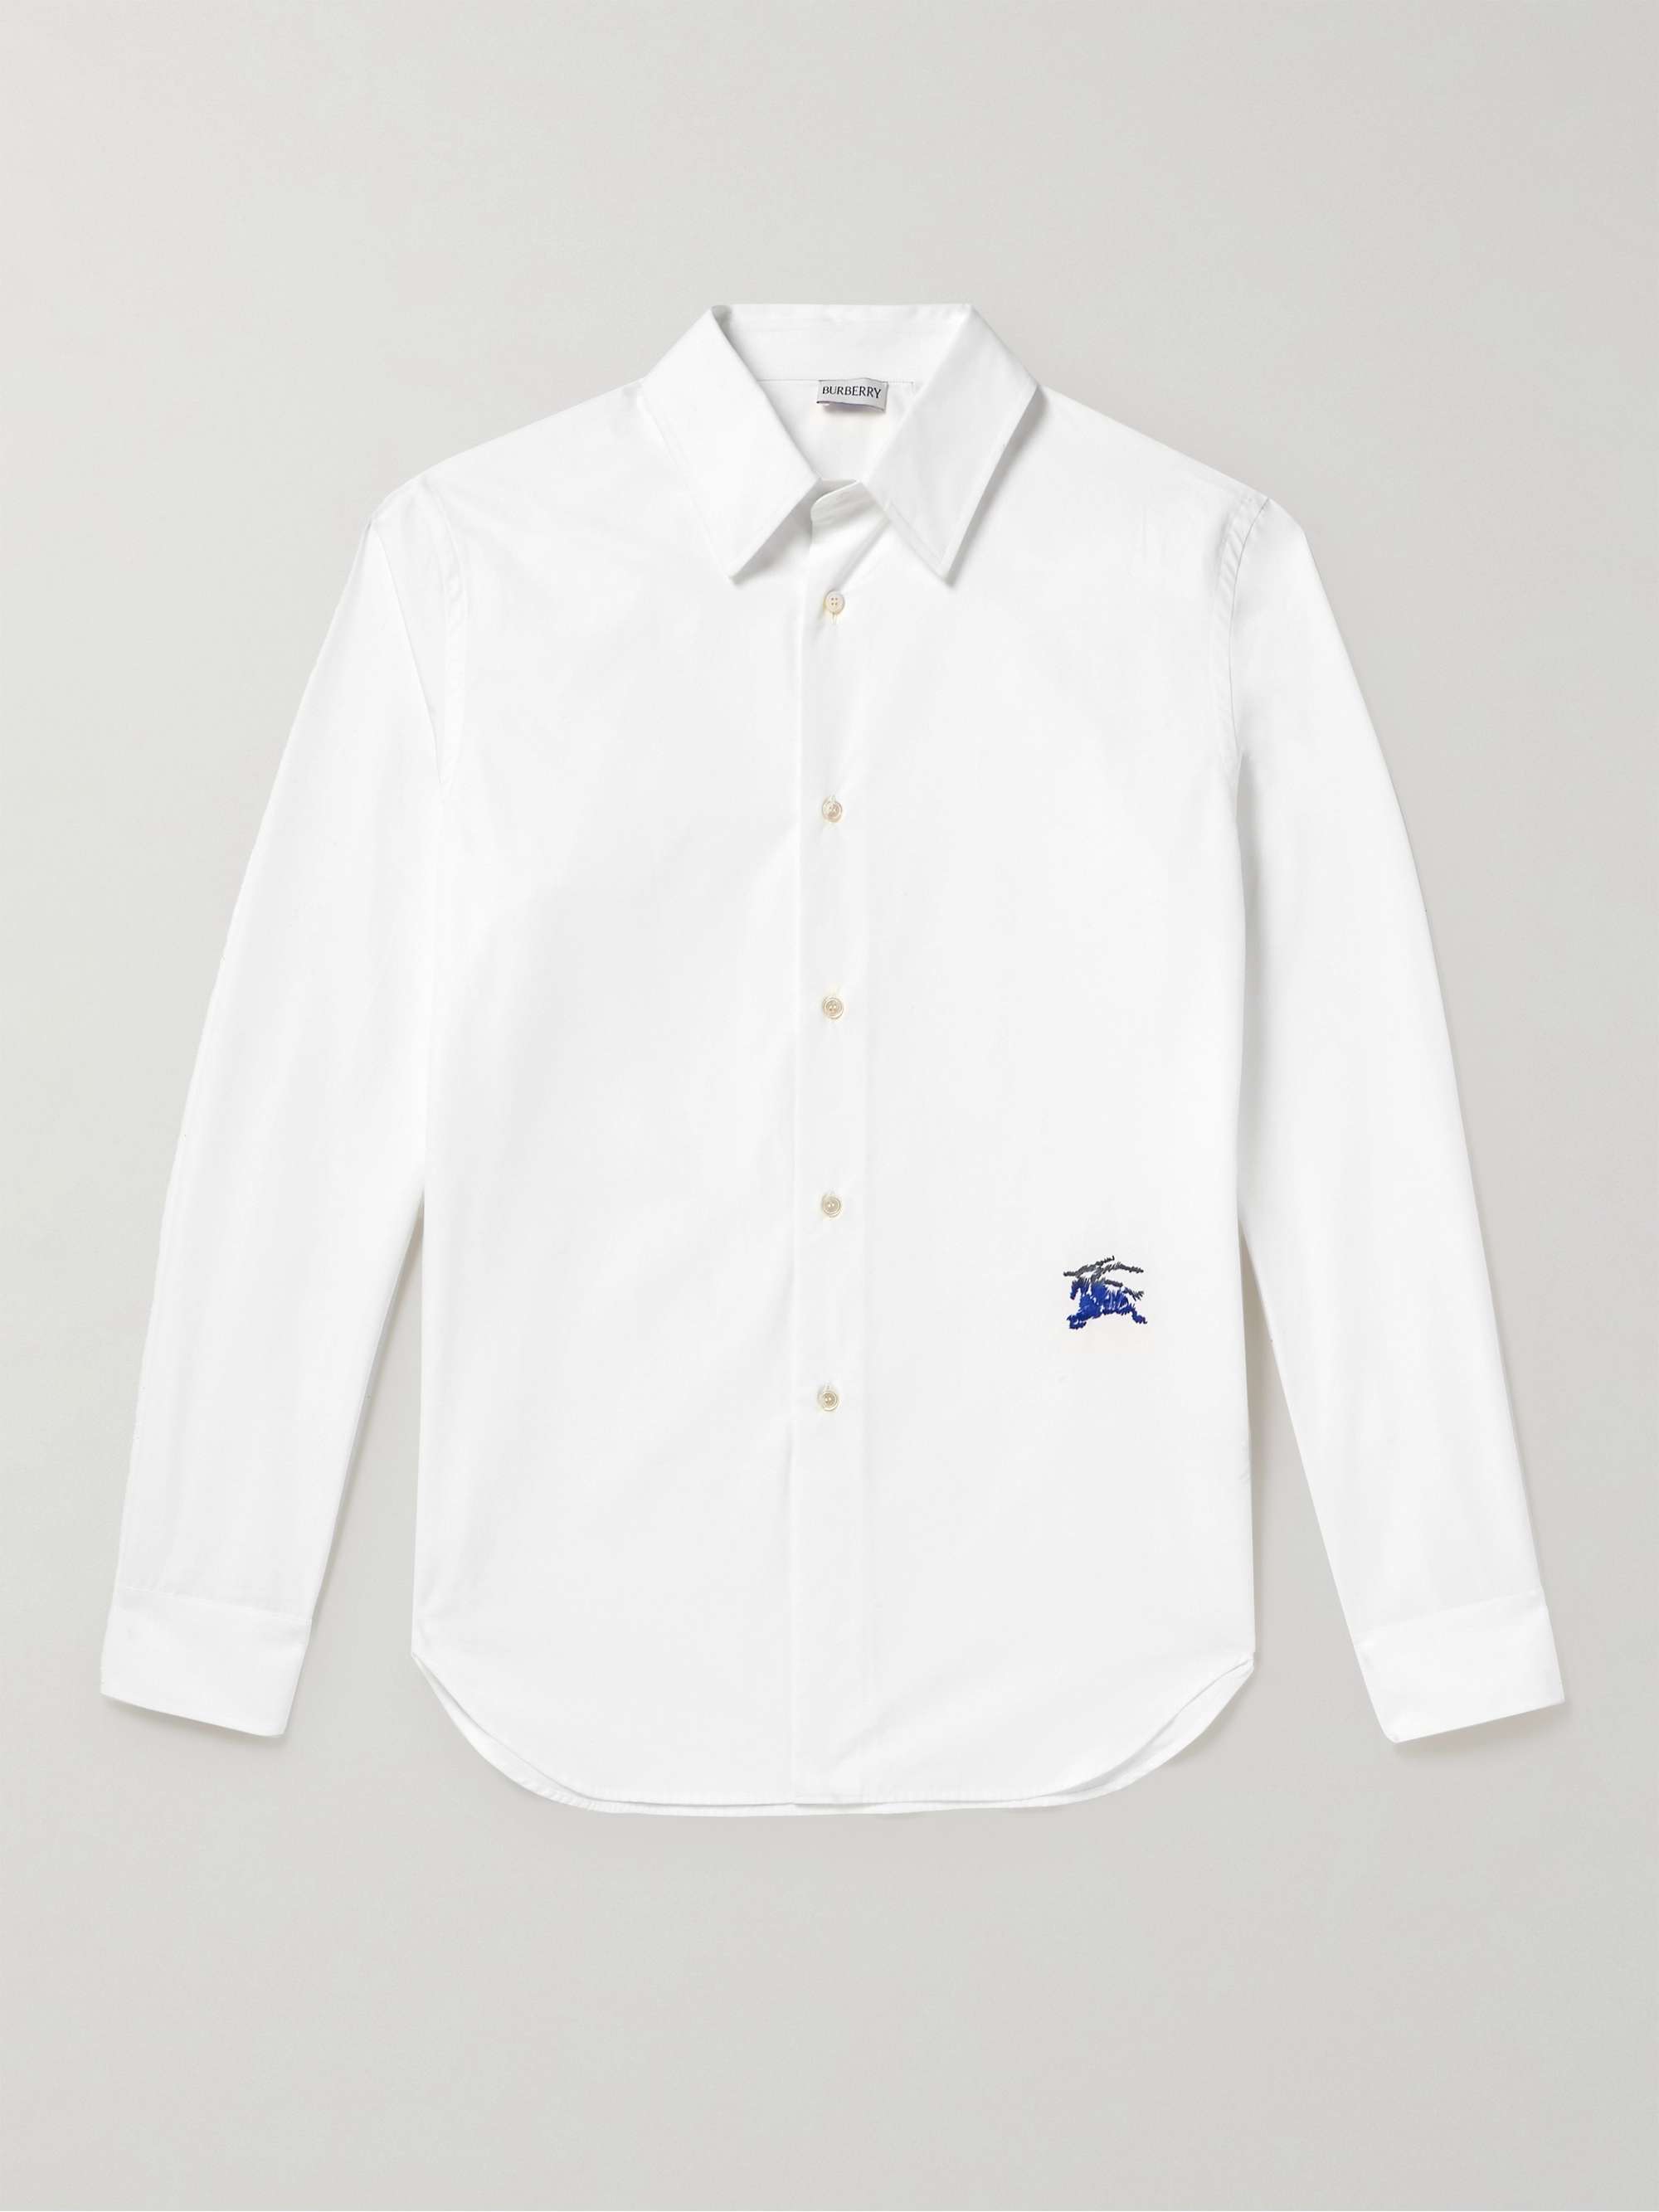 Burberry logo-embroidered Cotton-poplin Shirt - Men - White Casual Shirts - M